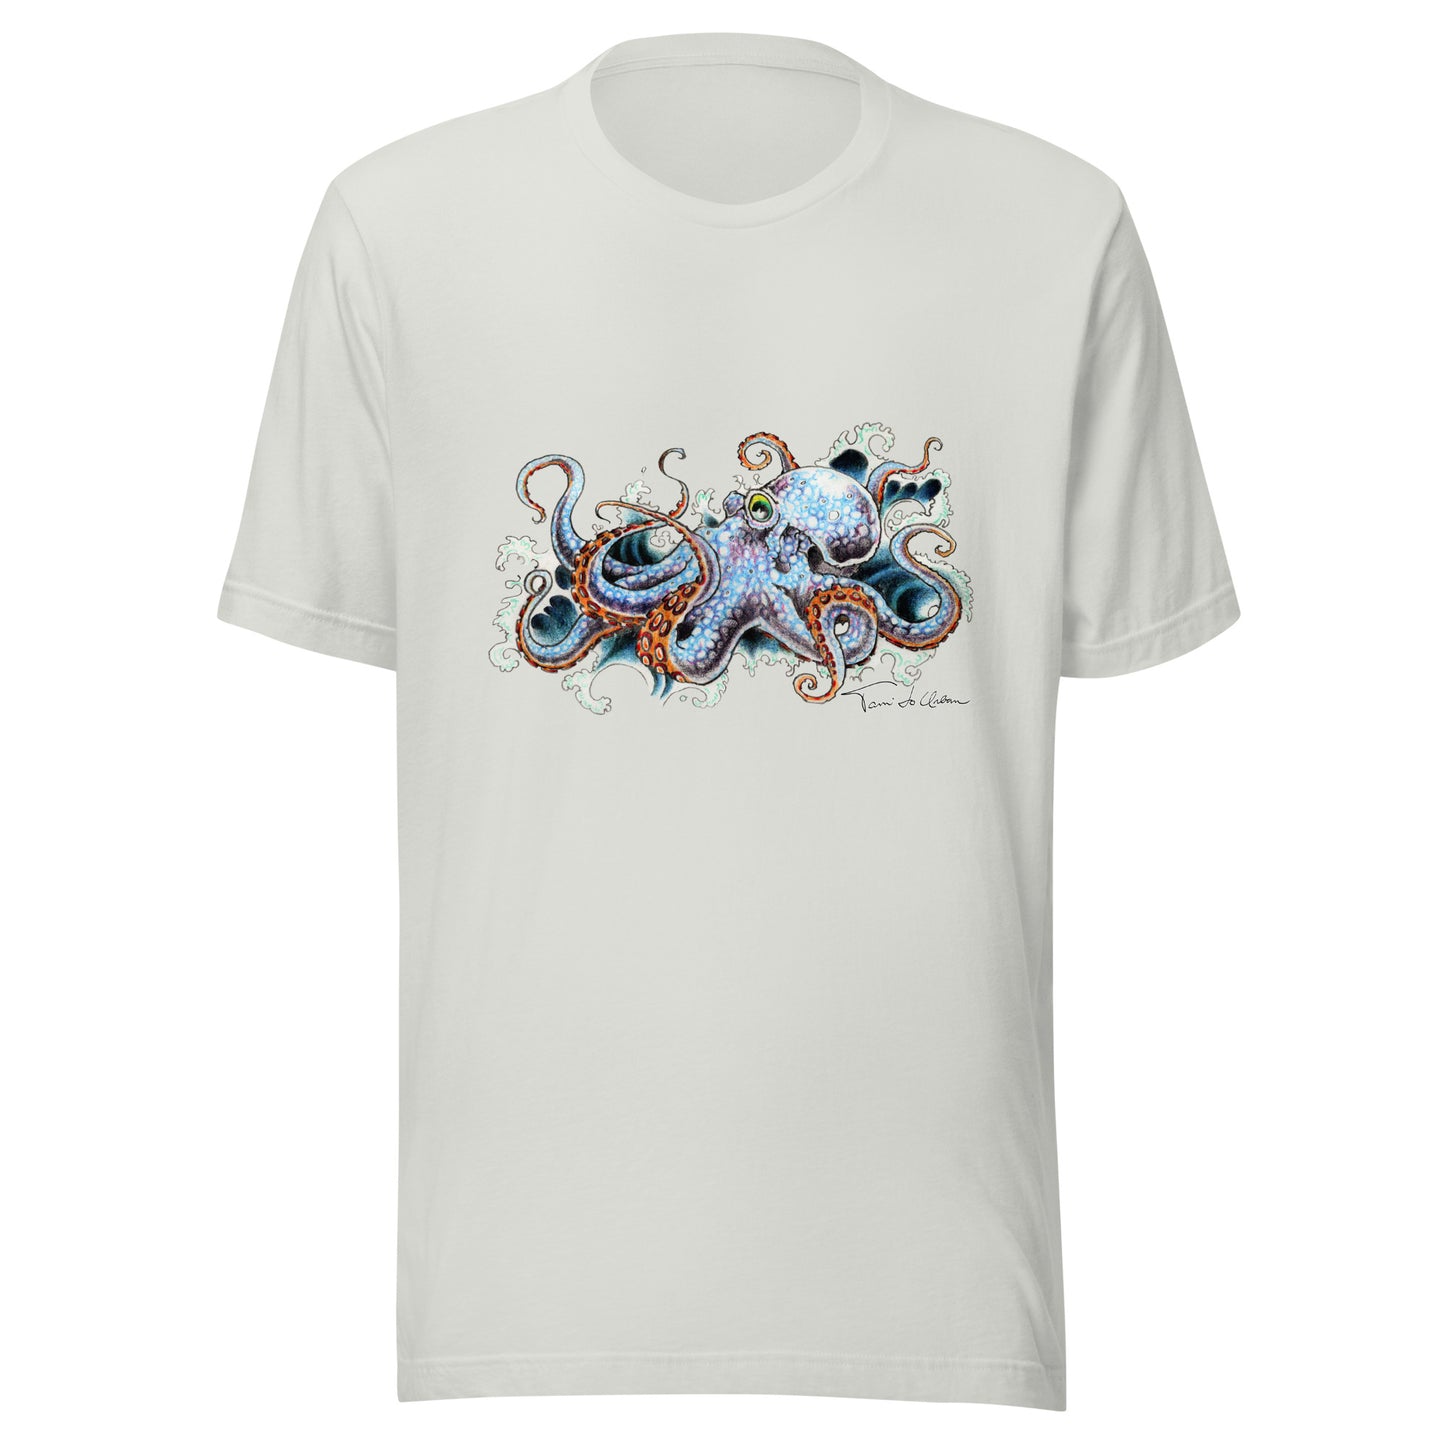 Octopus Crew Neck T-Shirt